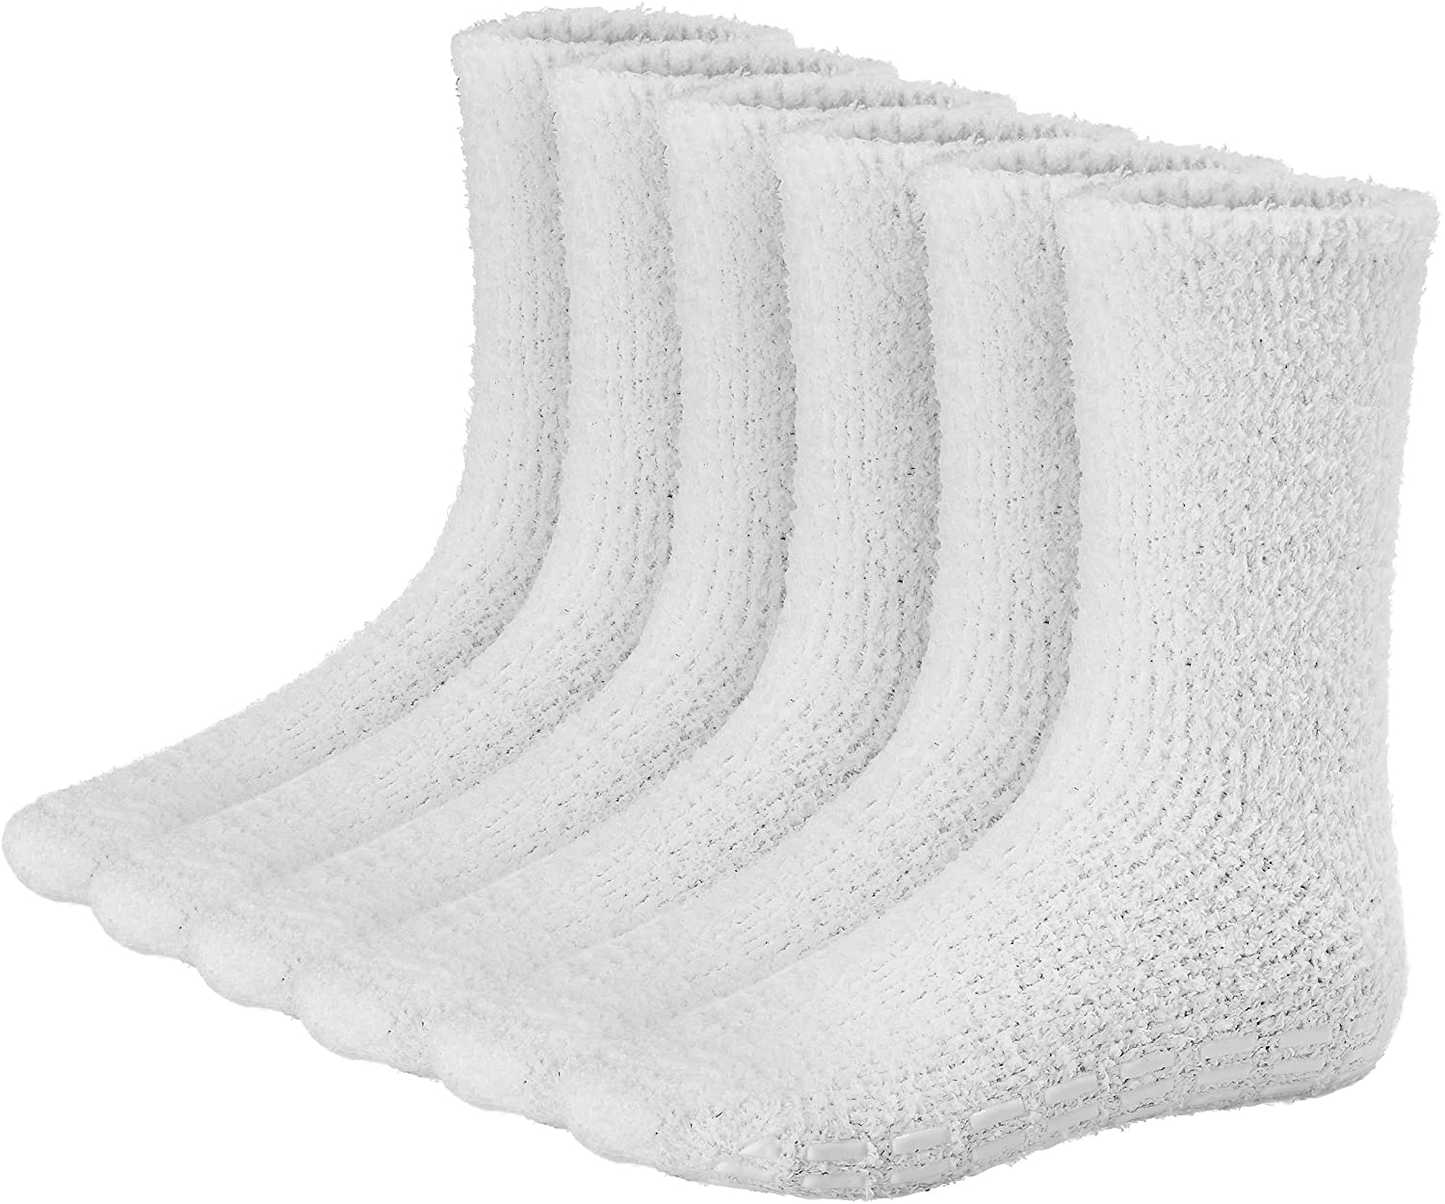 6 Pairs Mens Fuzzy Socks Grip Socks Microfiber Plush Sleeping Socks Soft Anti-Skid Solid Debra Weitzner